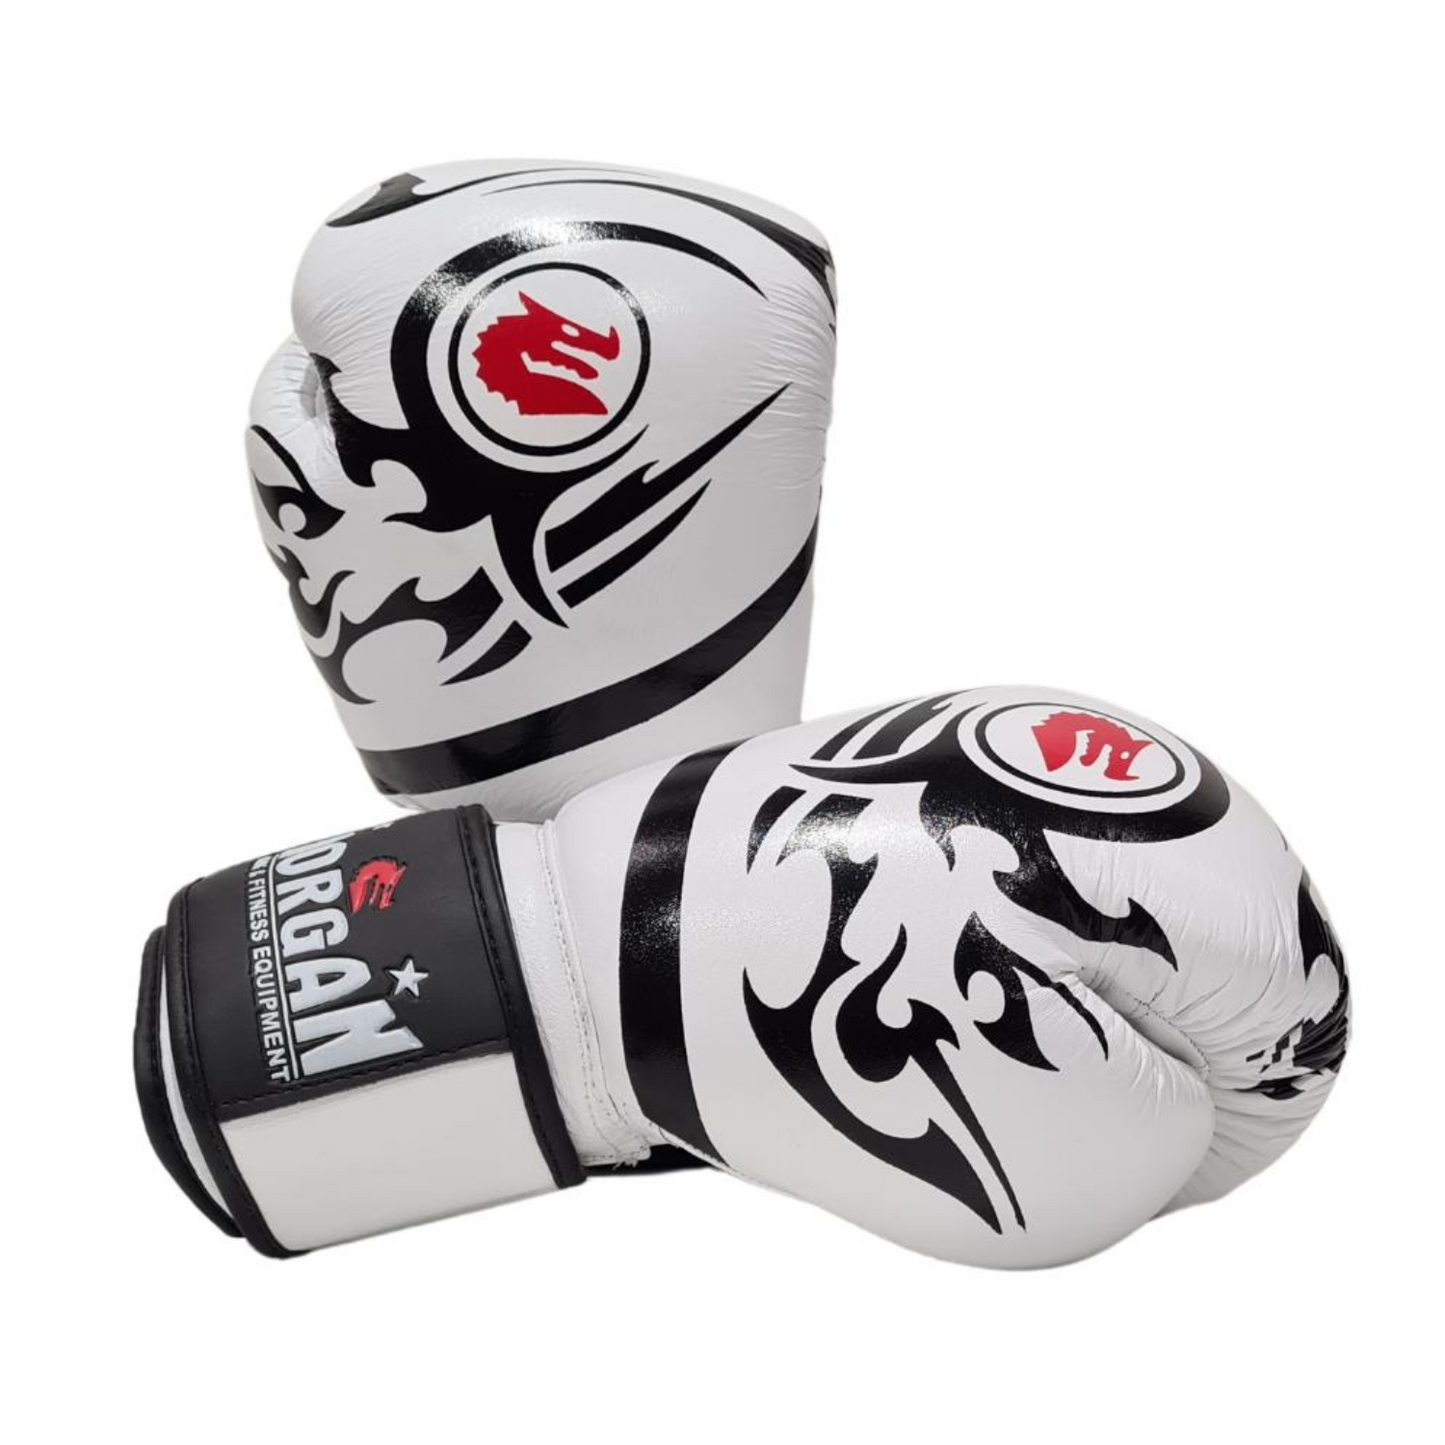 Morgan Elite Boxing & Muay Thai Leather Gloves (8-12-16OZ)